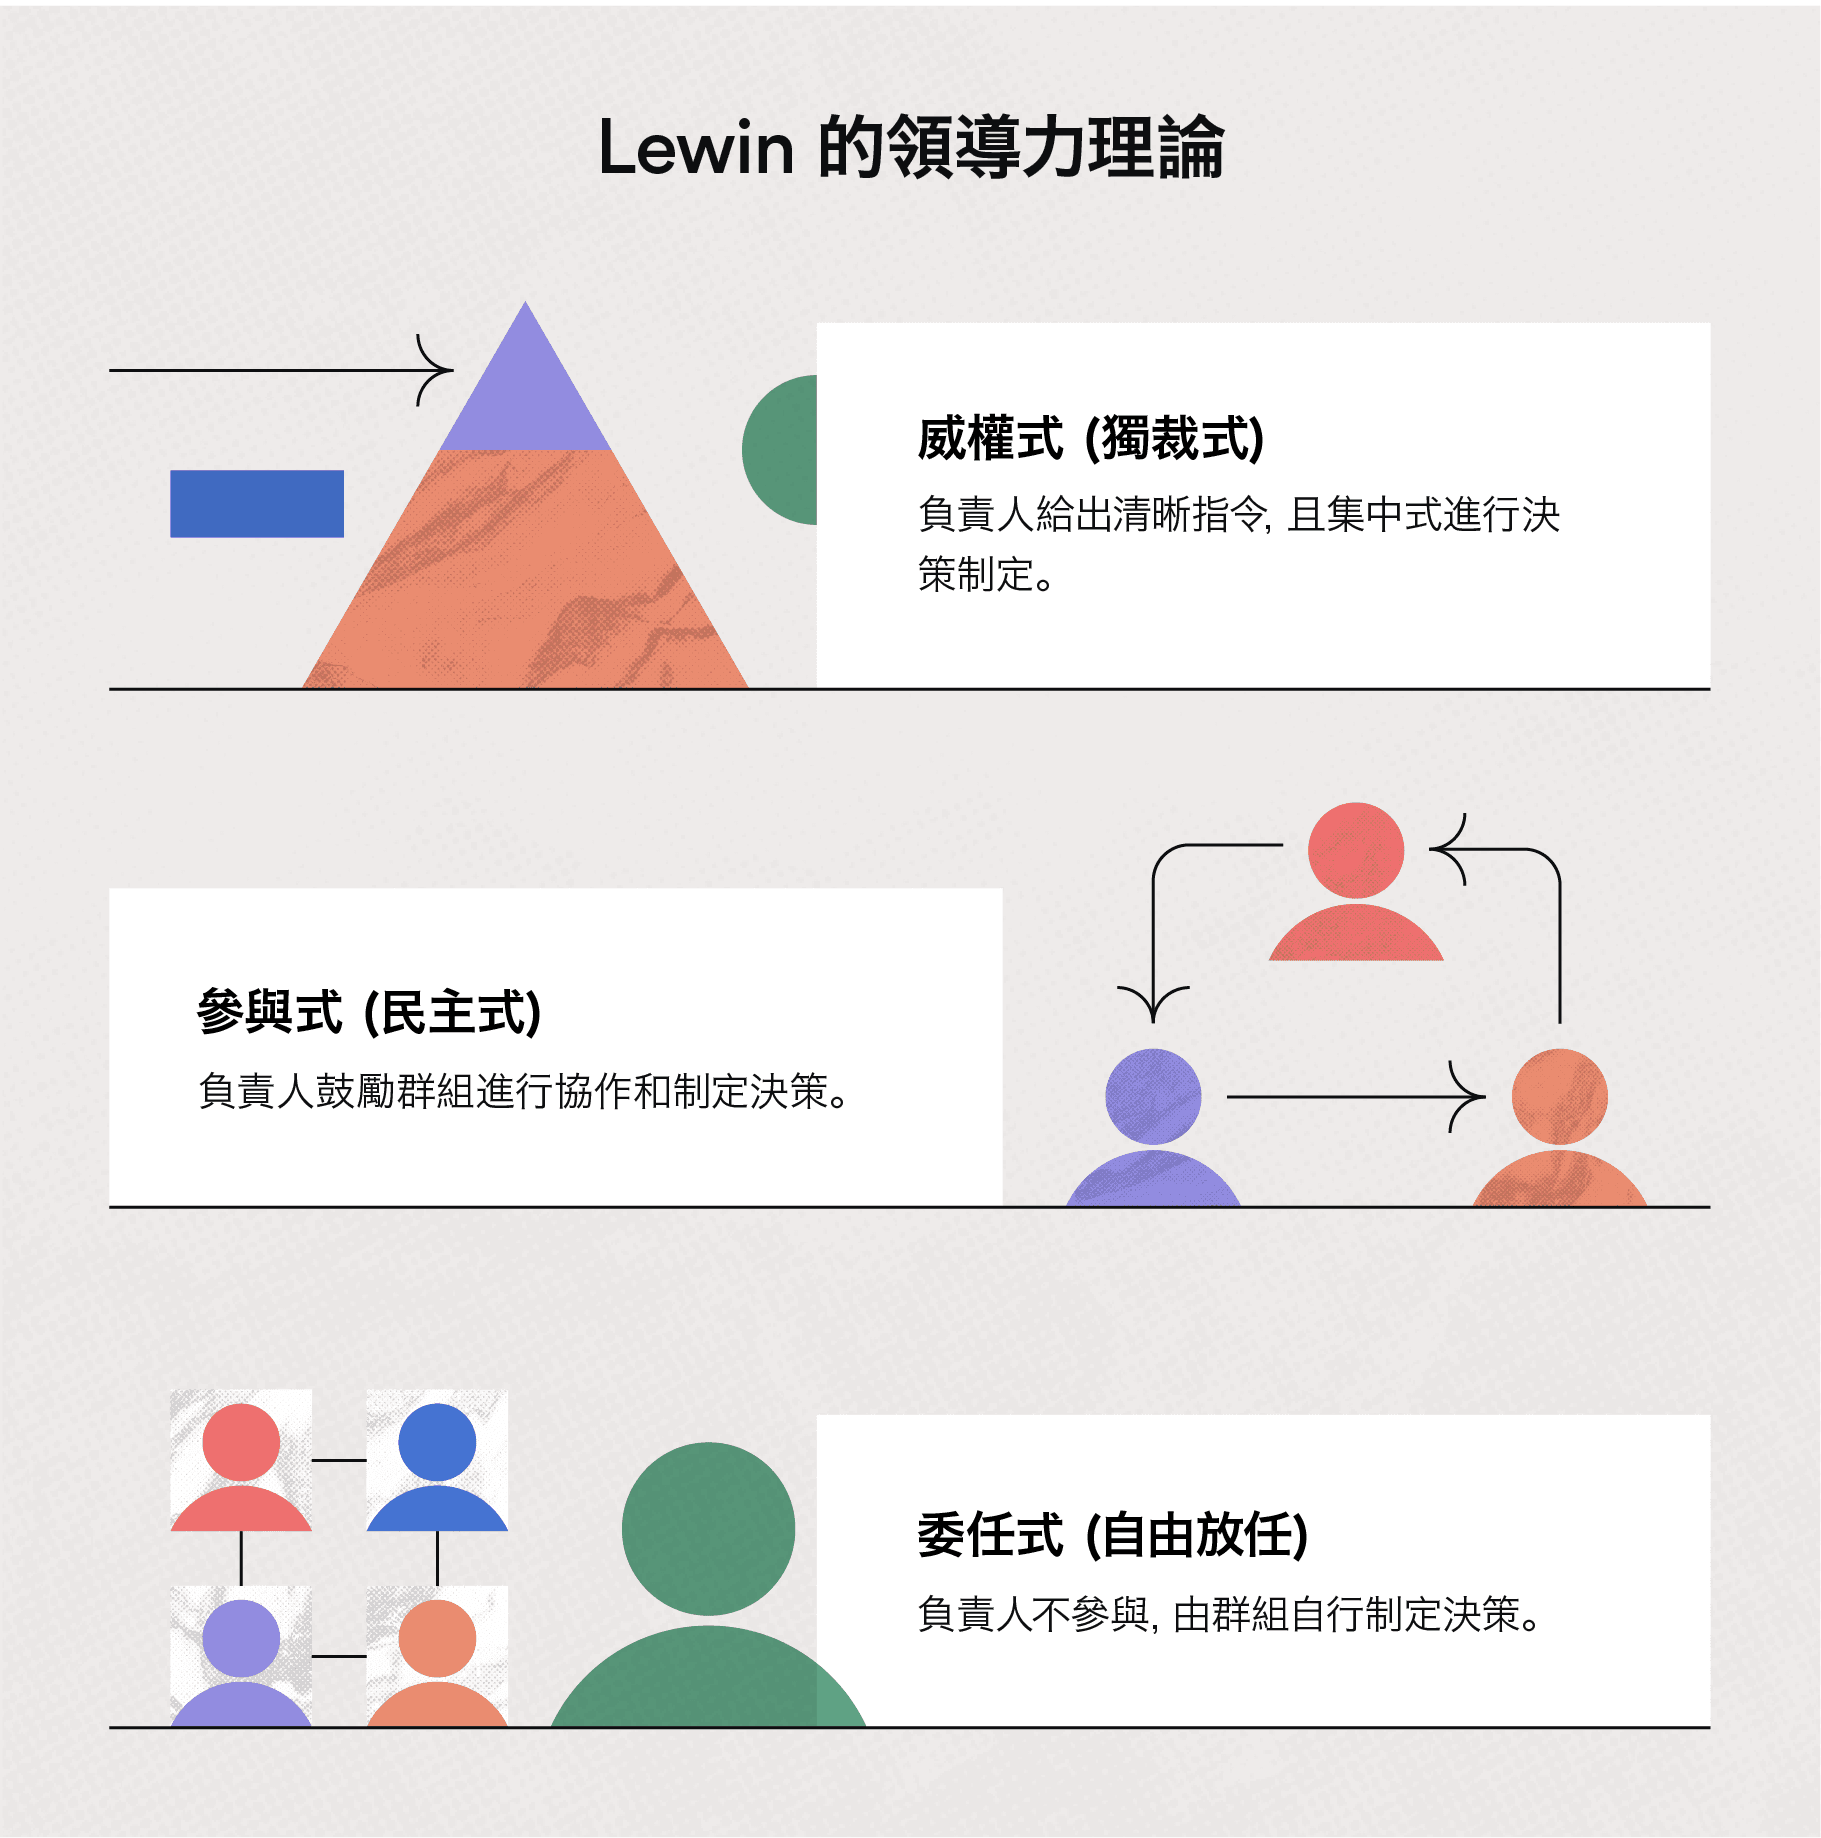 Lewin 的領導力理論